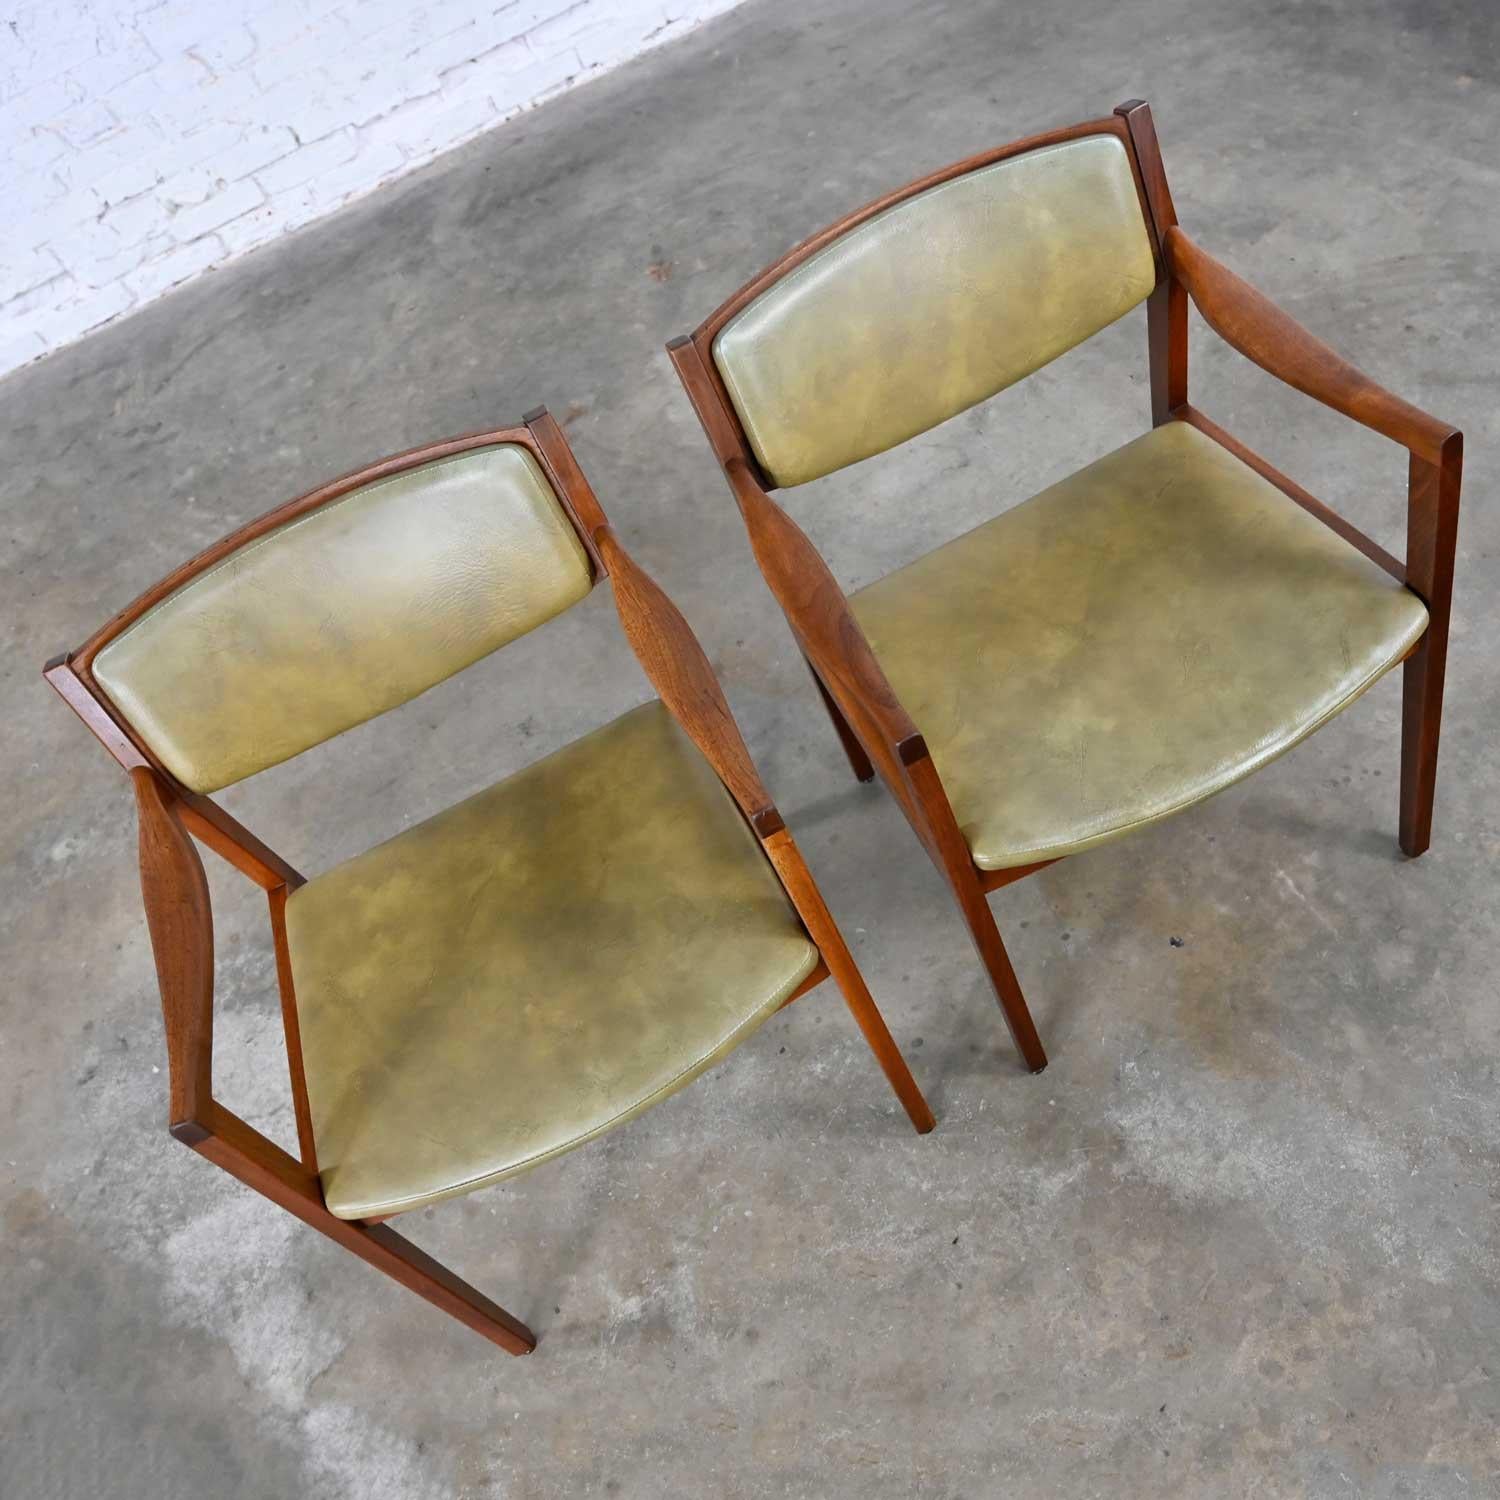 2 Mid-Century Modern Solid Walnut & Olive Green Faux Leather Chairs by Gunlocke 1